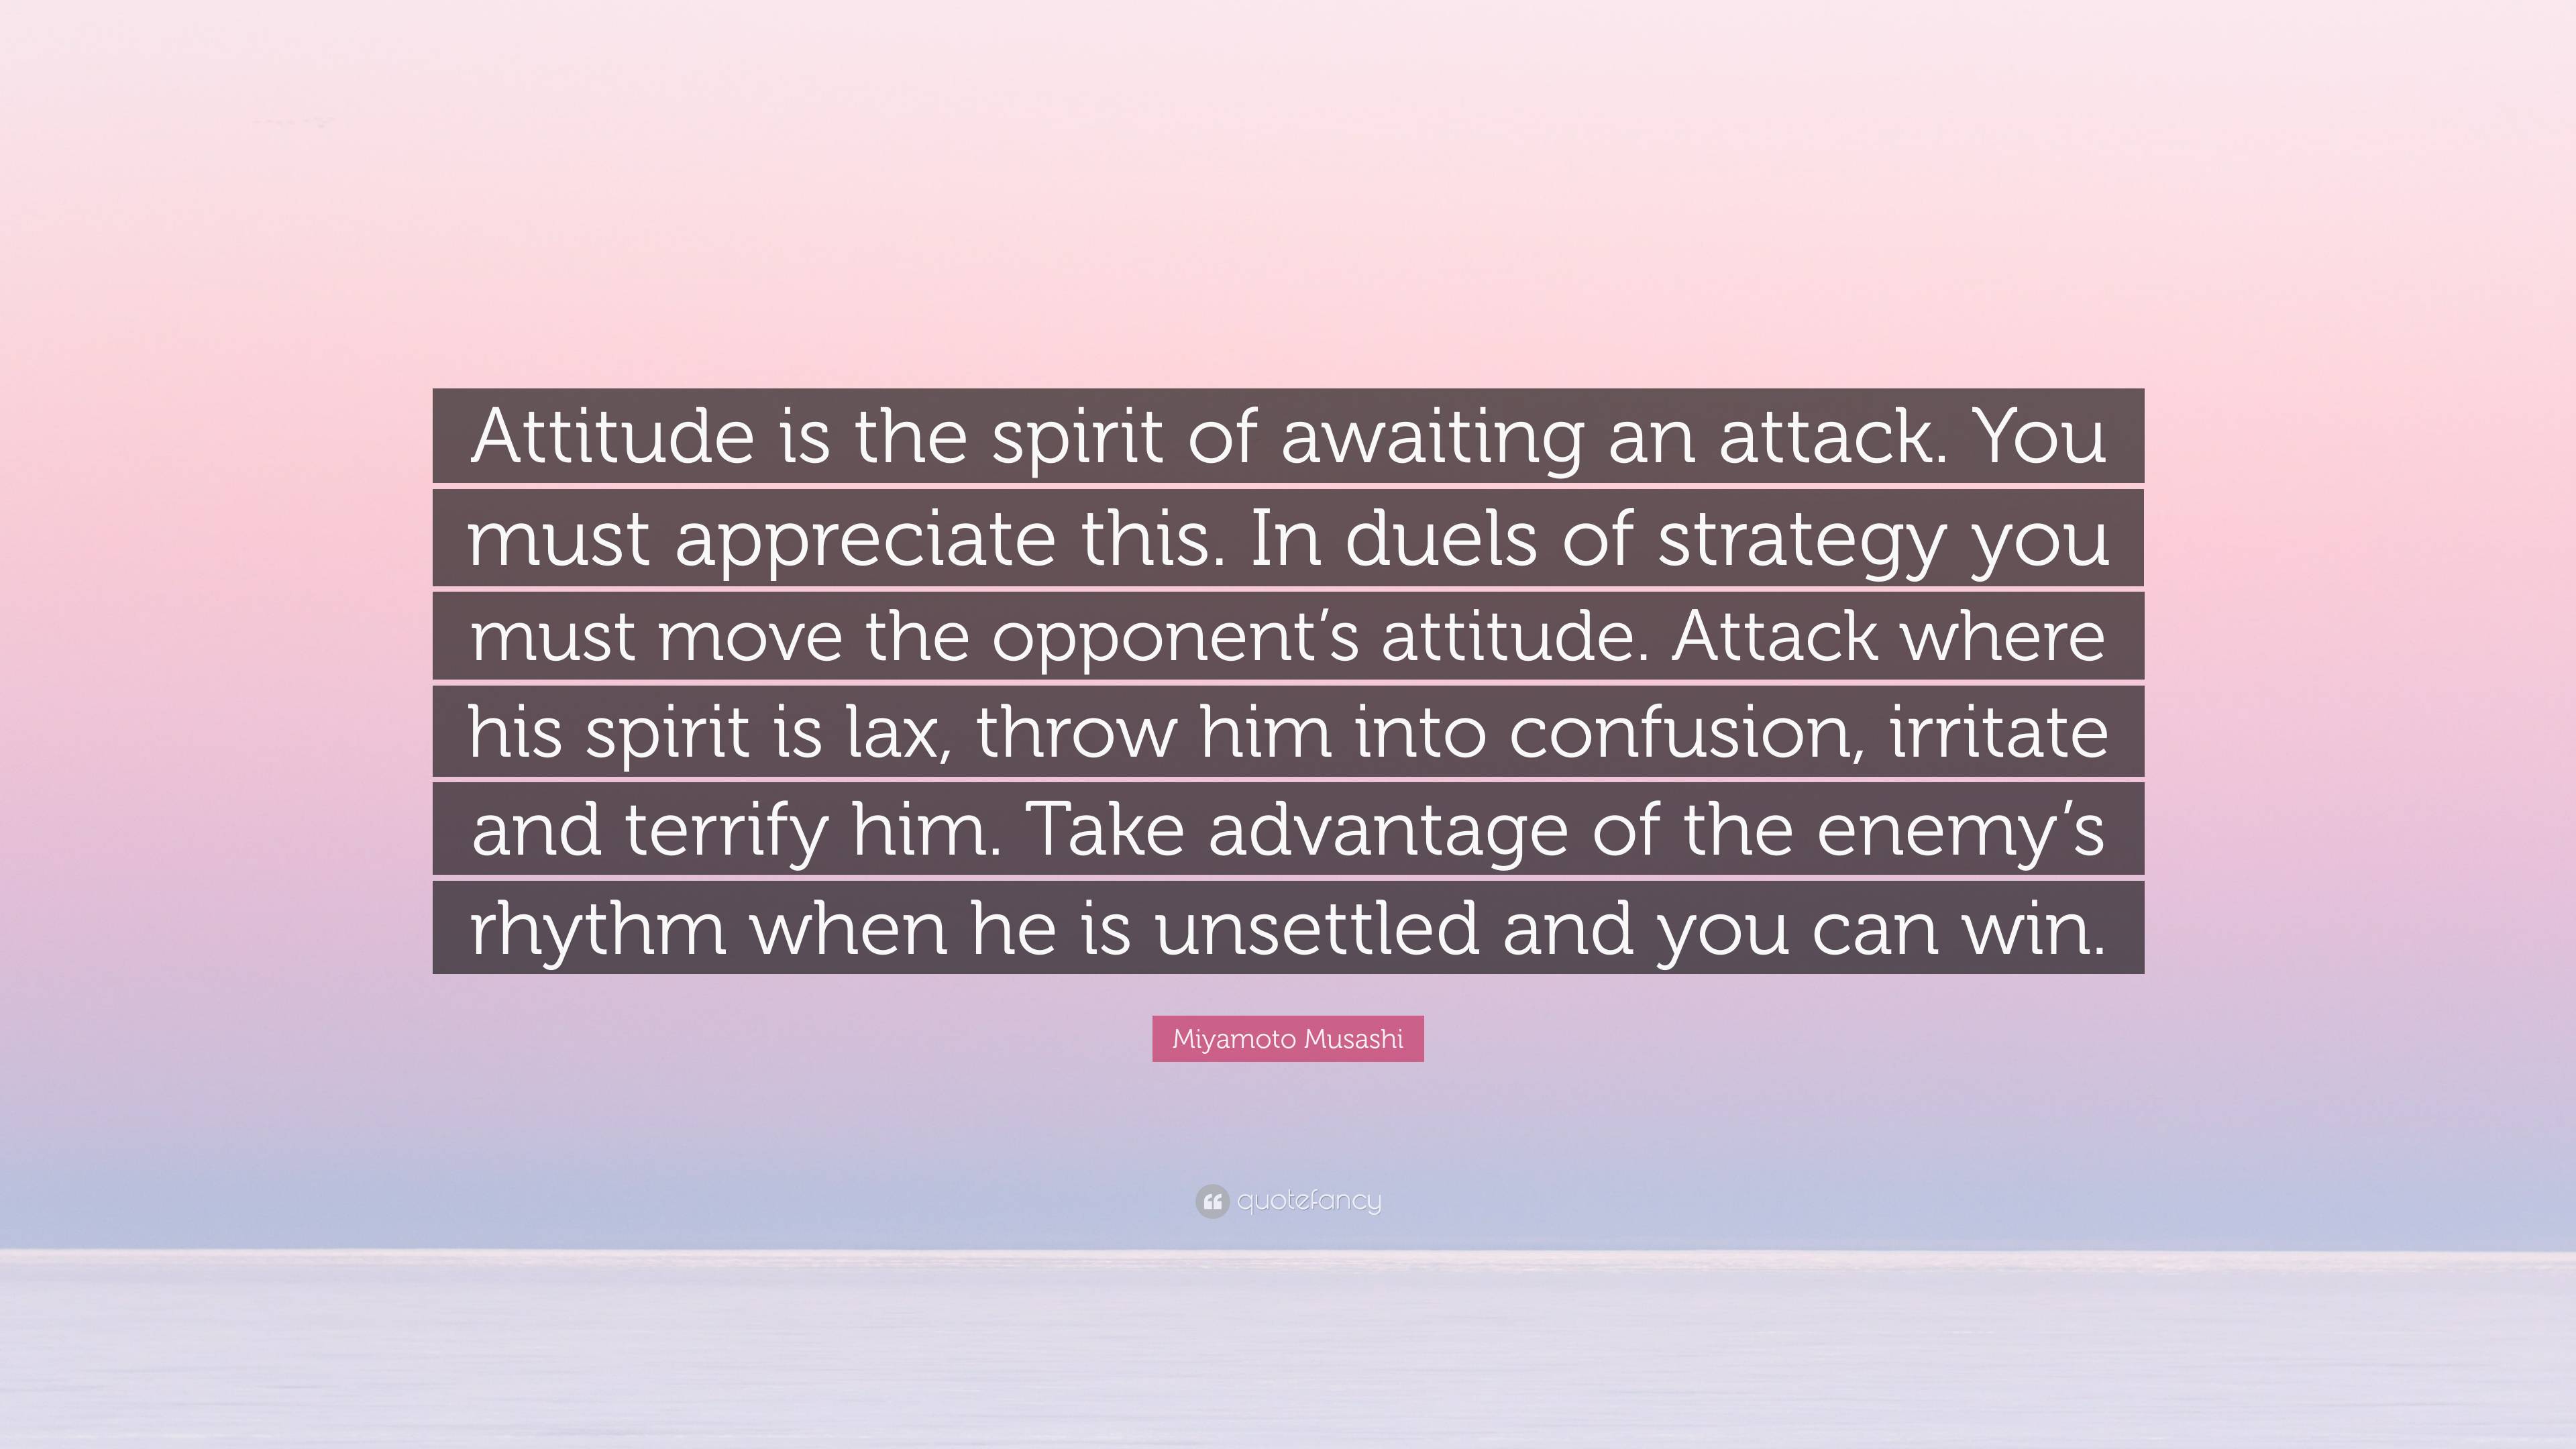 Miyamoto Musashi Quote: “Attitude is the spirit of awaiting an attack ...